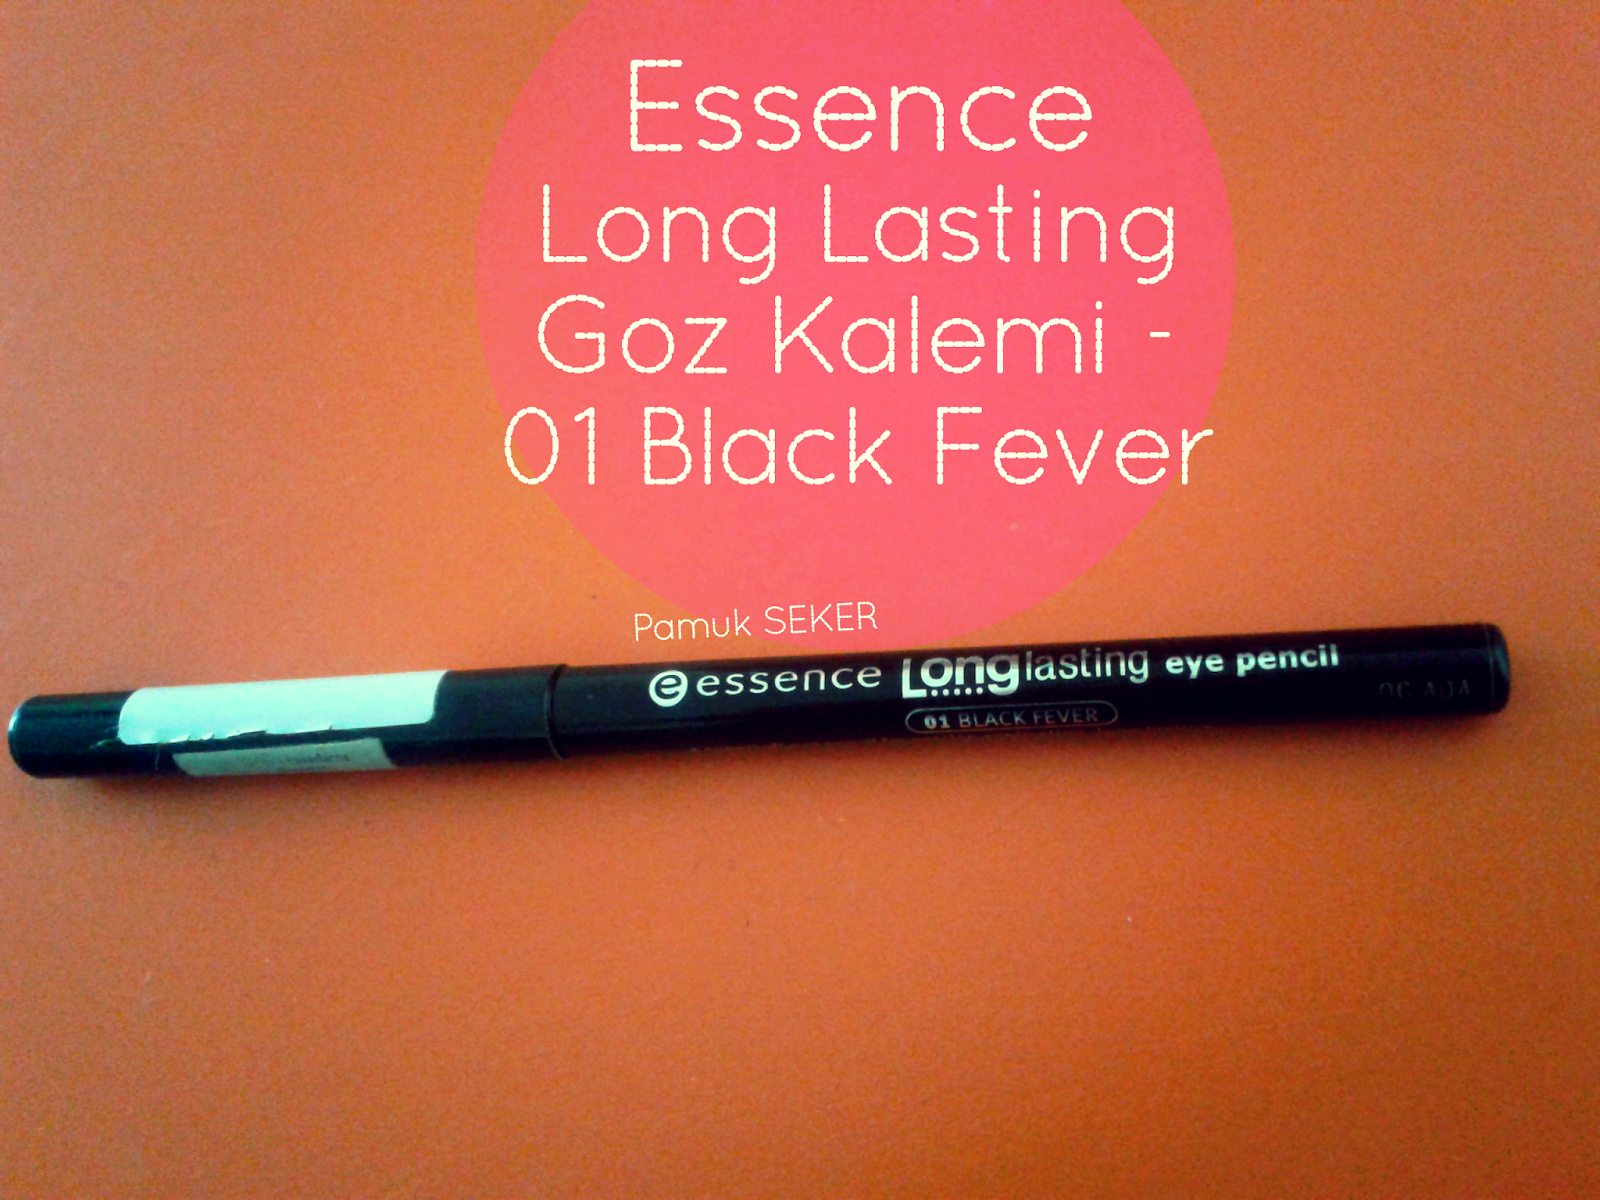 Essence long lasting